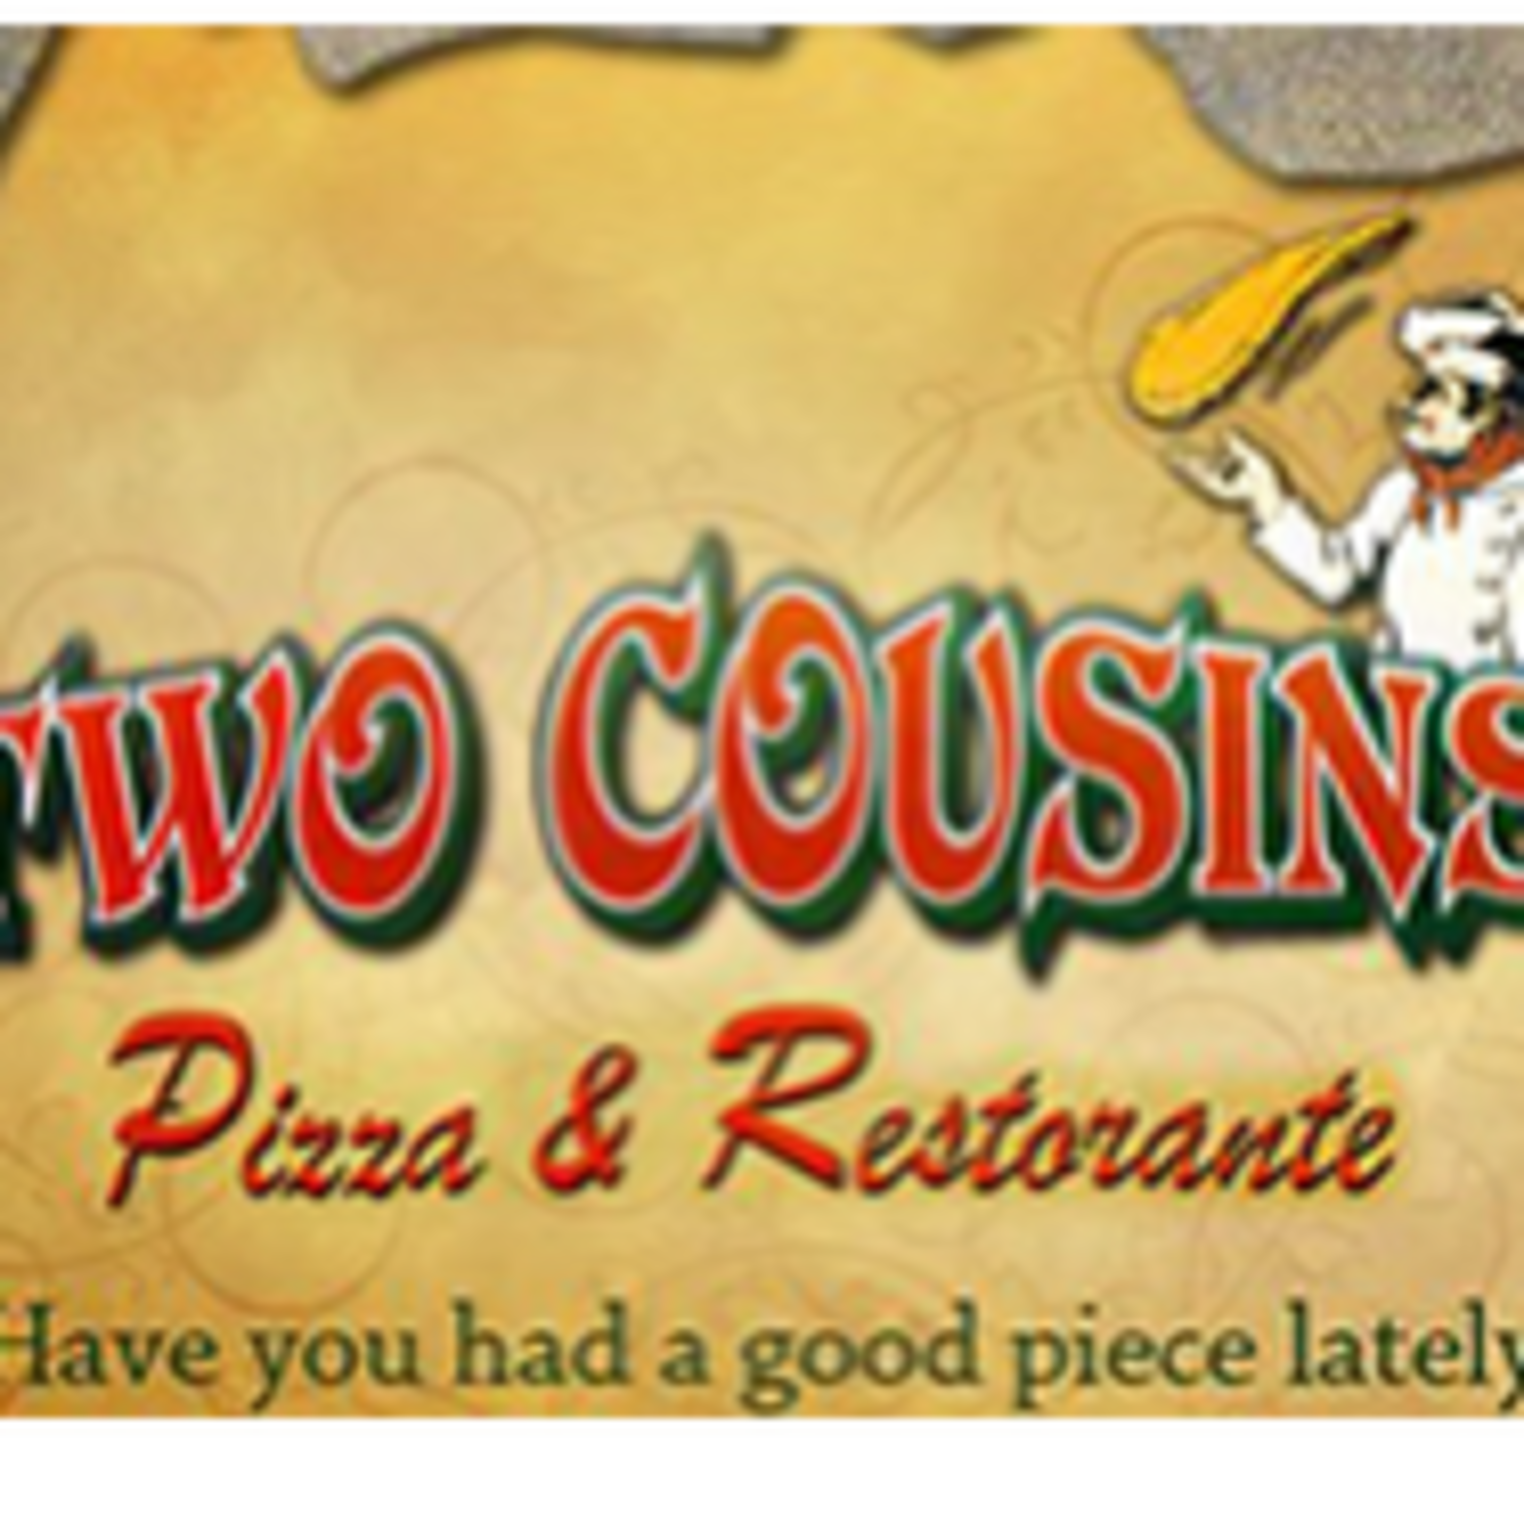 Two Cousins Pizza & Restaurant